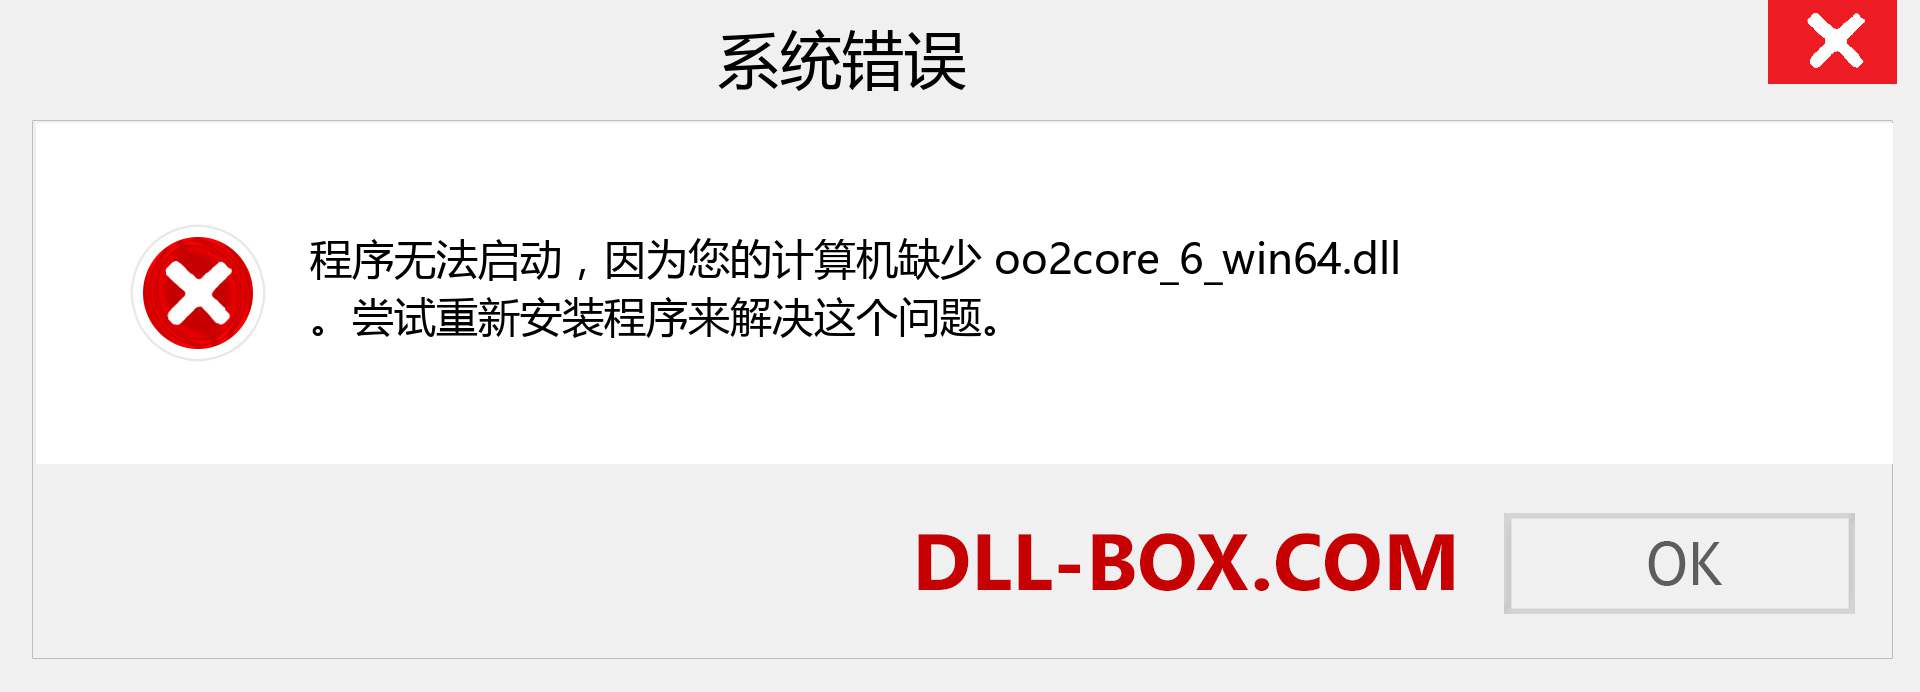 oo2core_6_win64.dll 文件丢失？。 适用于 Windows 7、8、10 的下载 - 修复 Windows、照片、图像上的 oo2core_6_win64 dll 丢失错误